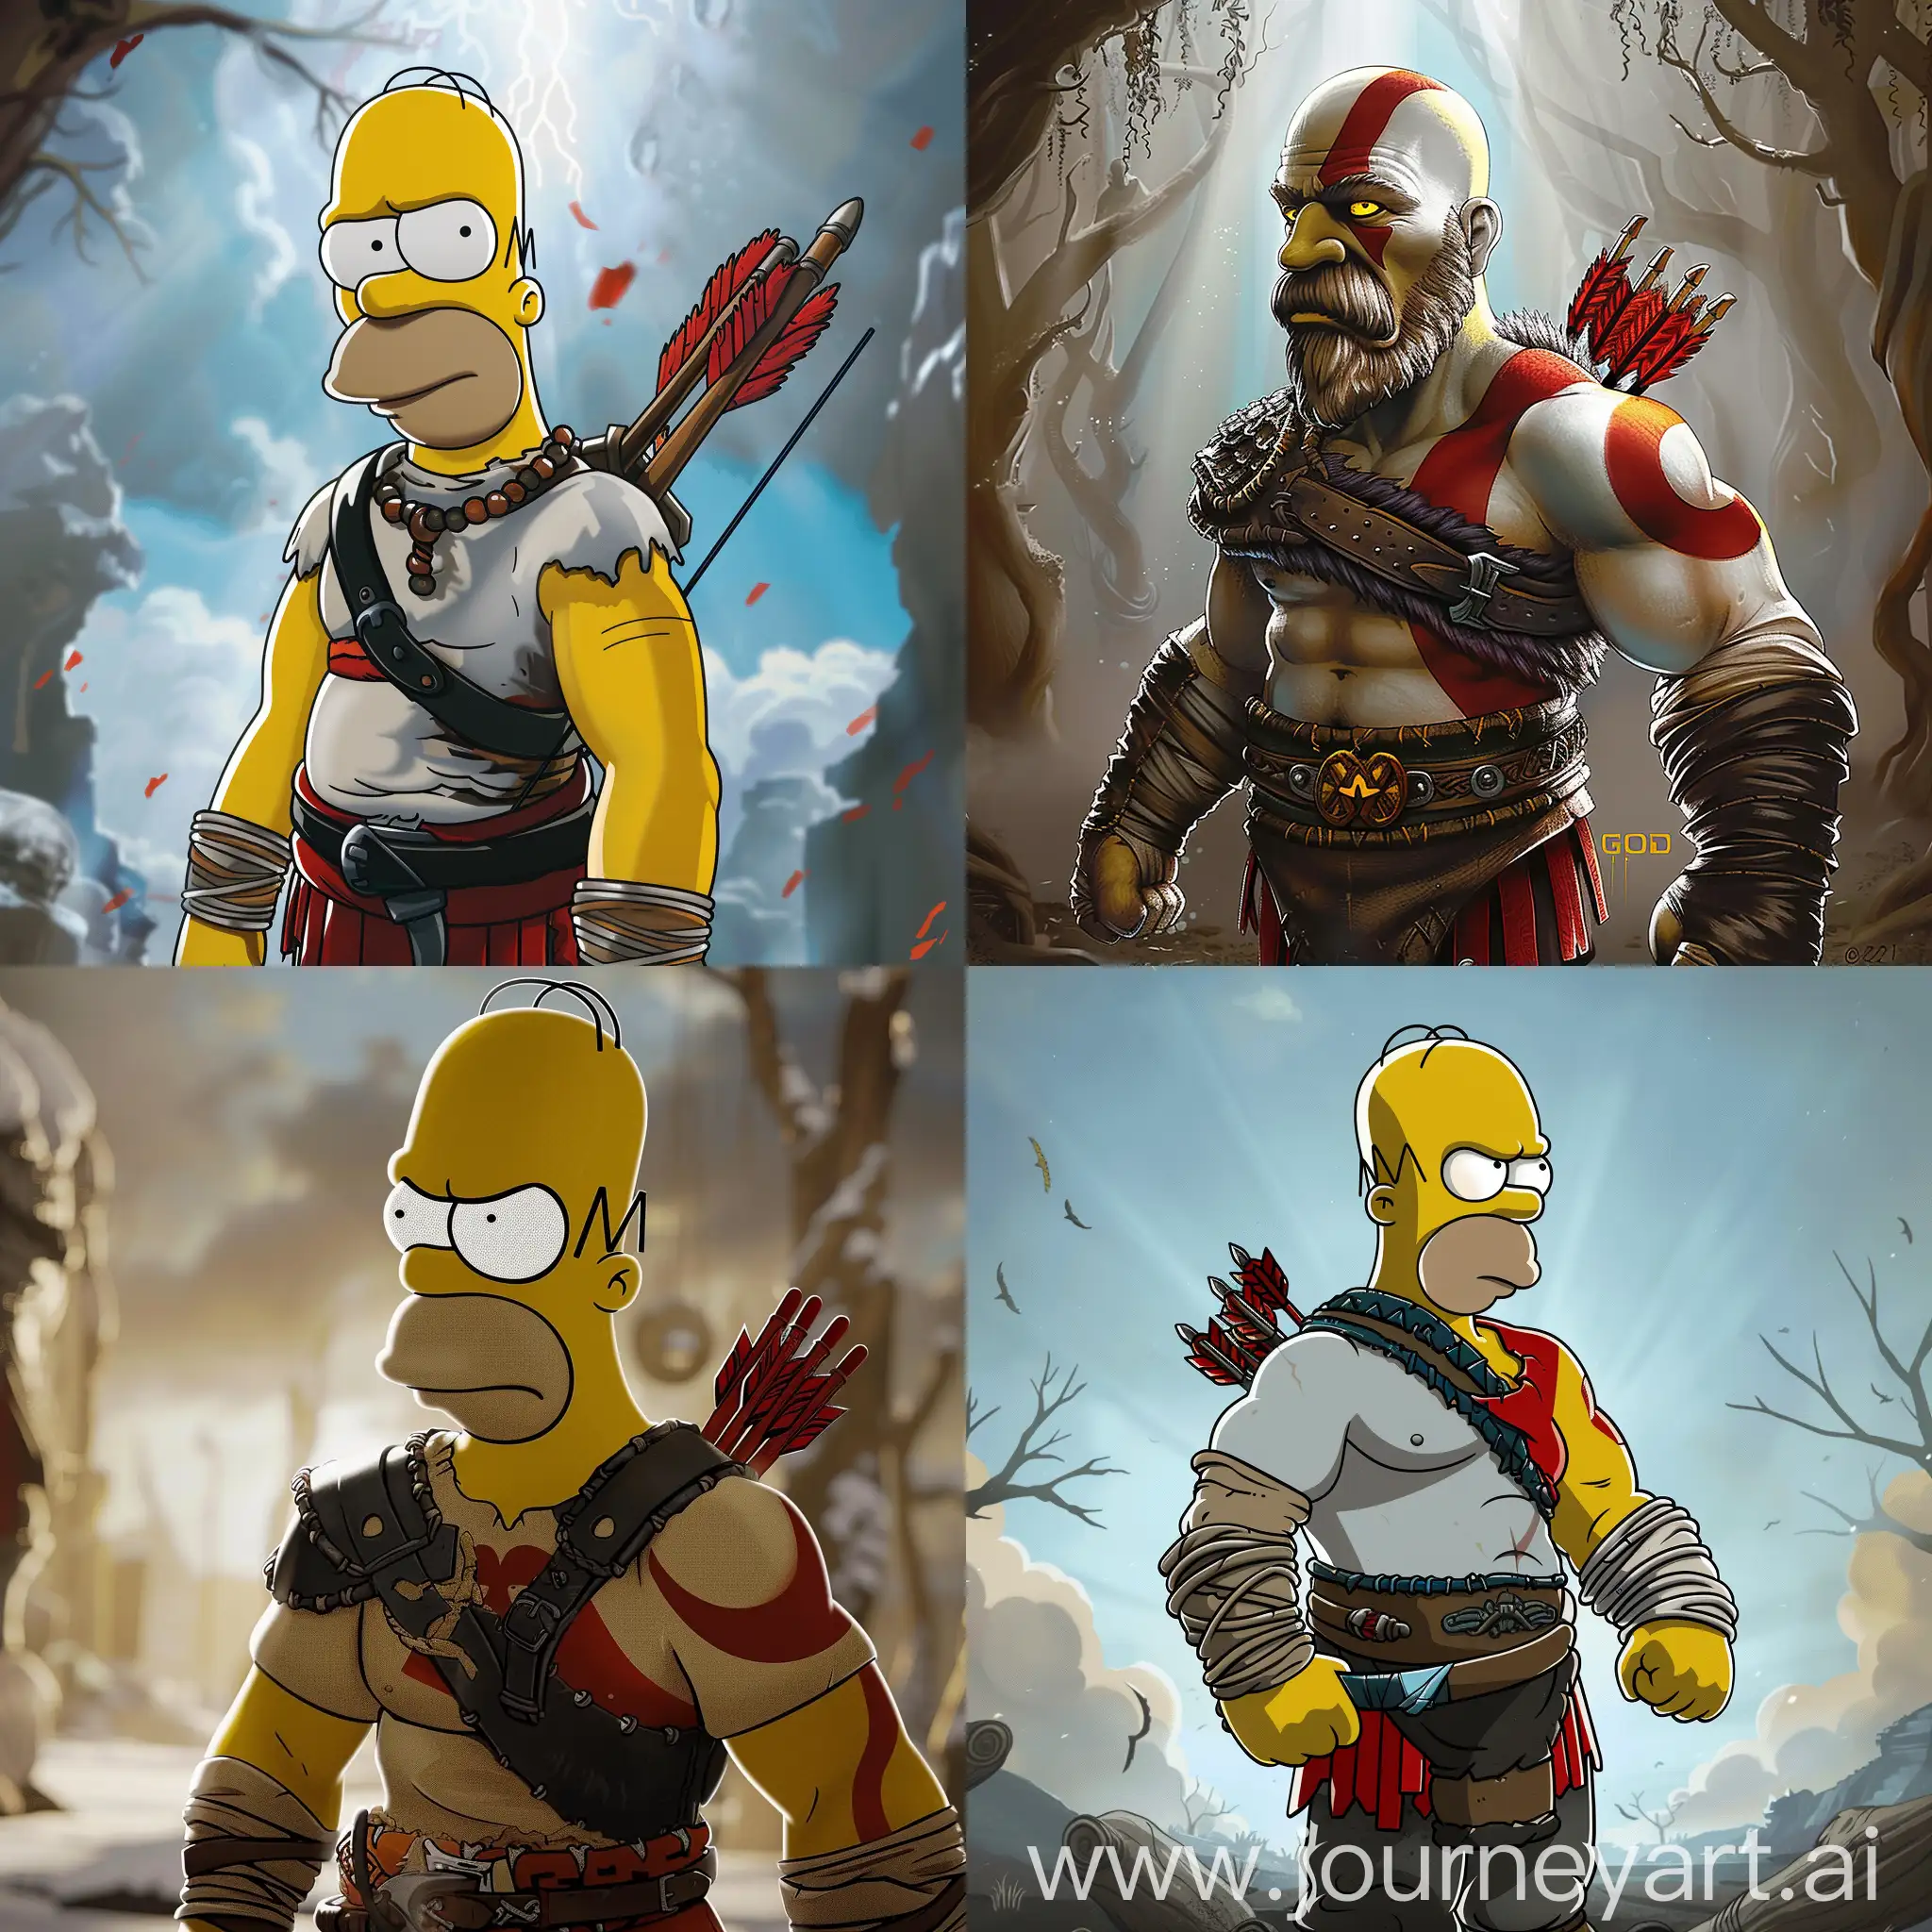 Homer Simpson as Kratos from God of War